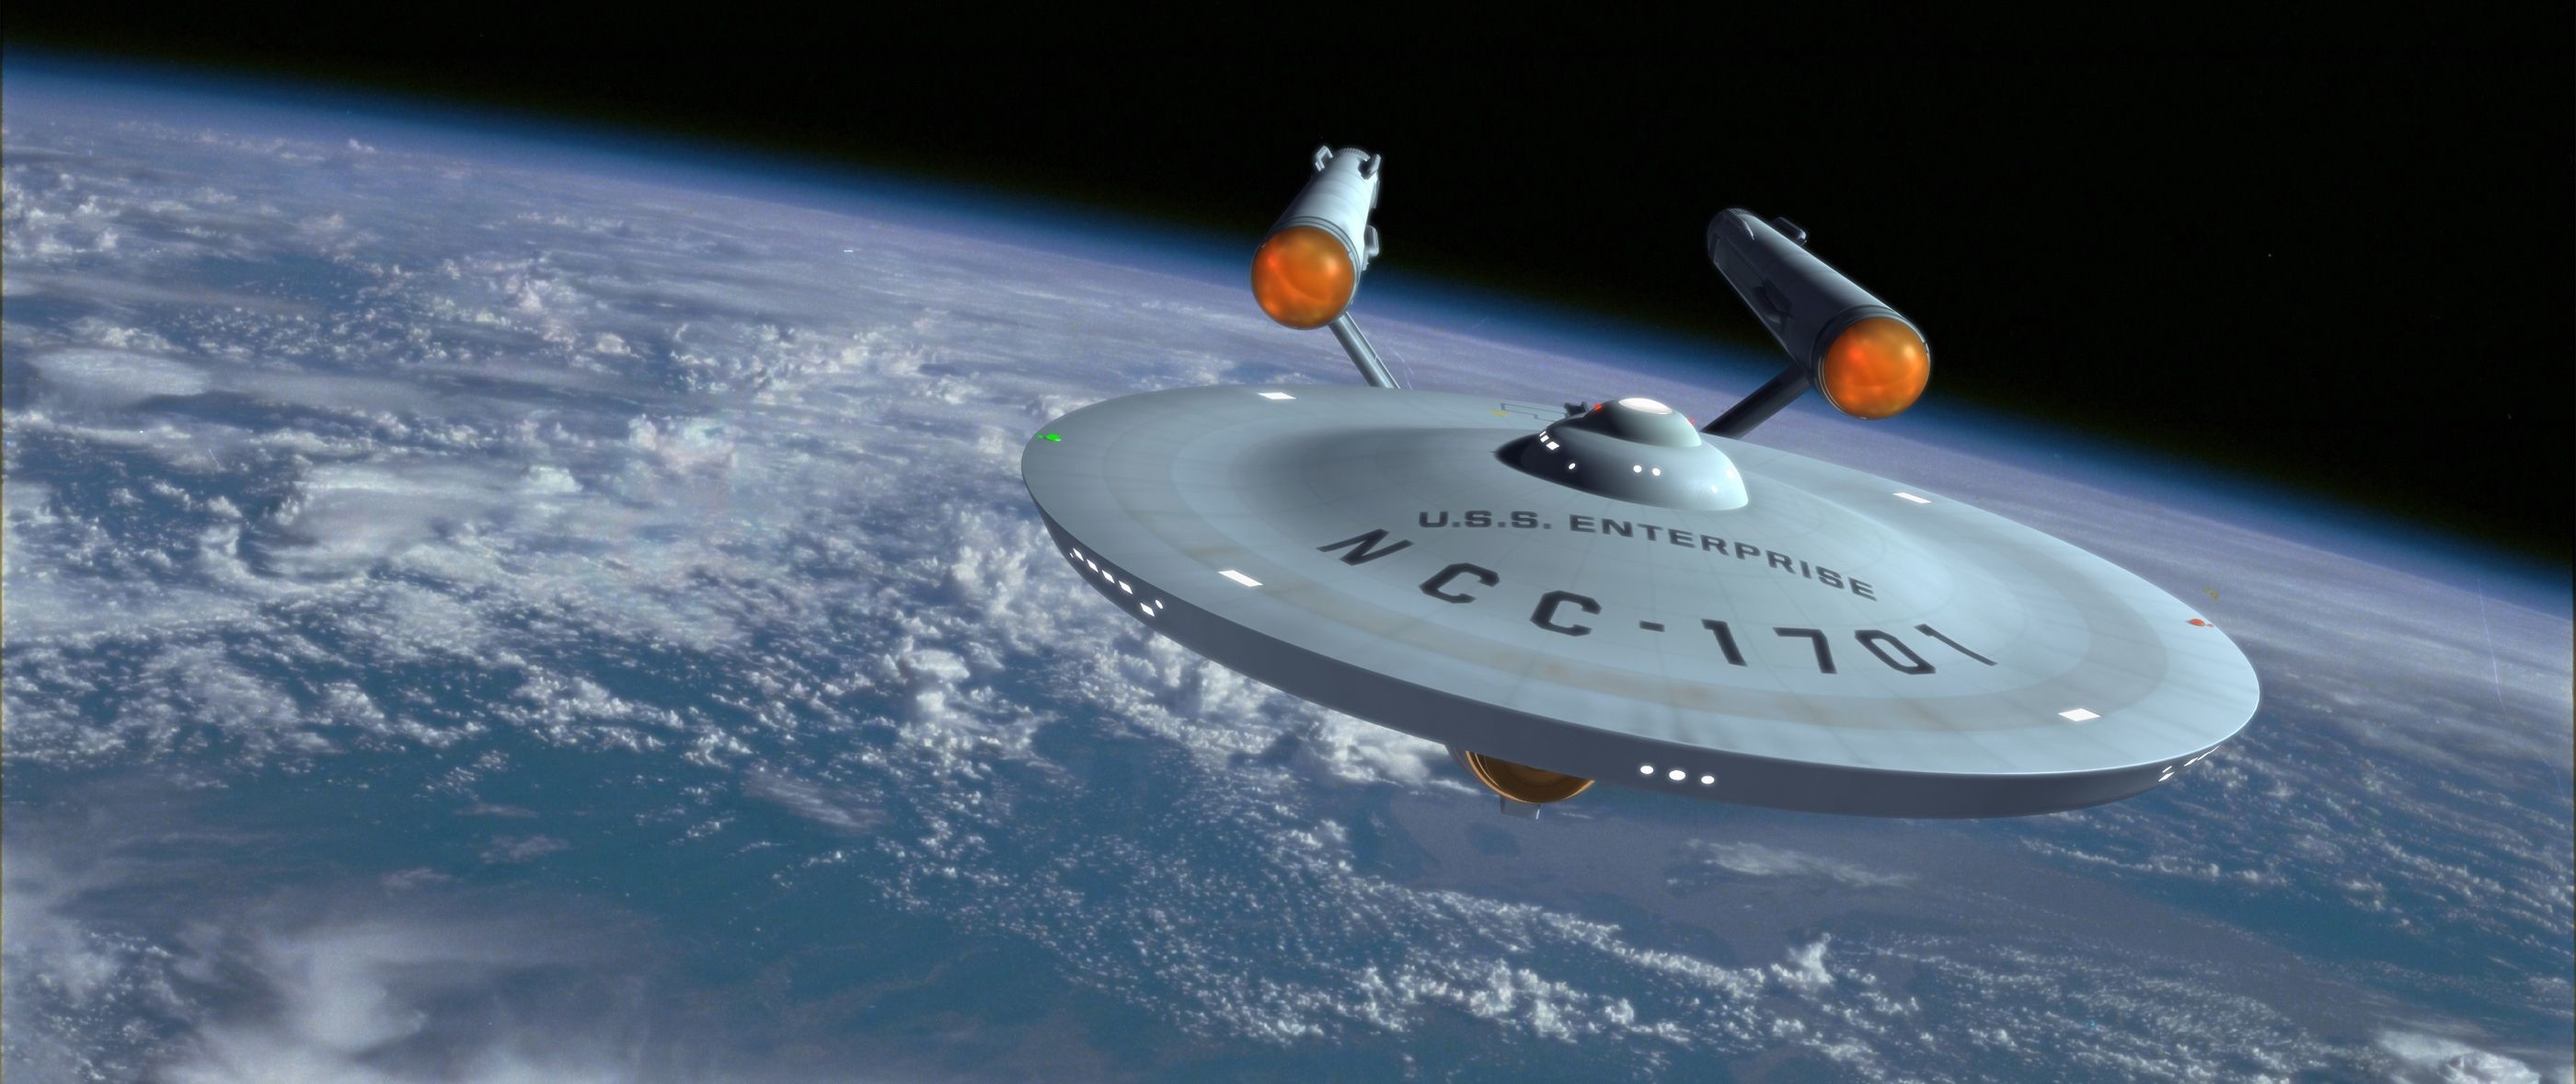 2800x1178 Star Trek-USS Enterprise NCC-1701 Wallpaper (google.image) 03.18 Heading  Picture